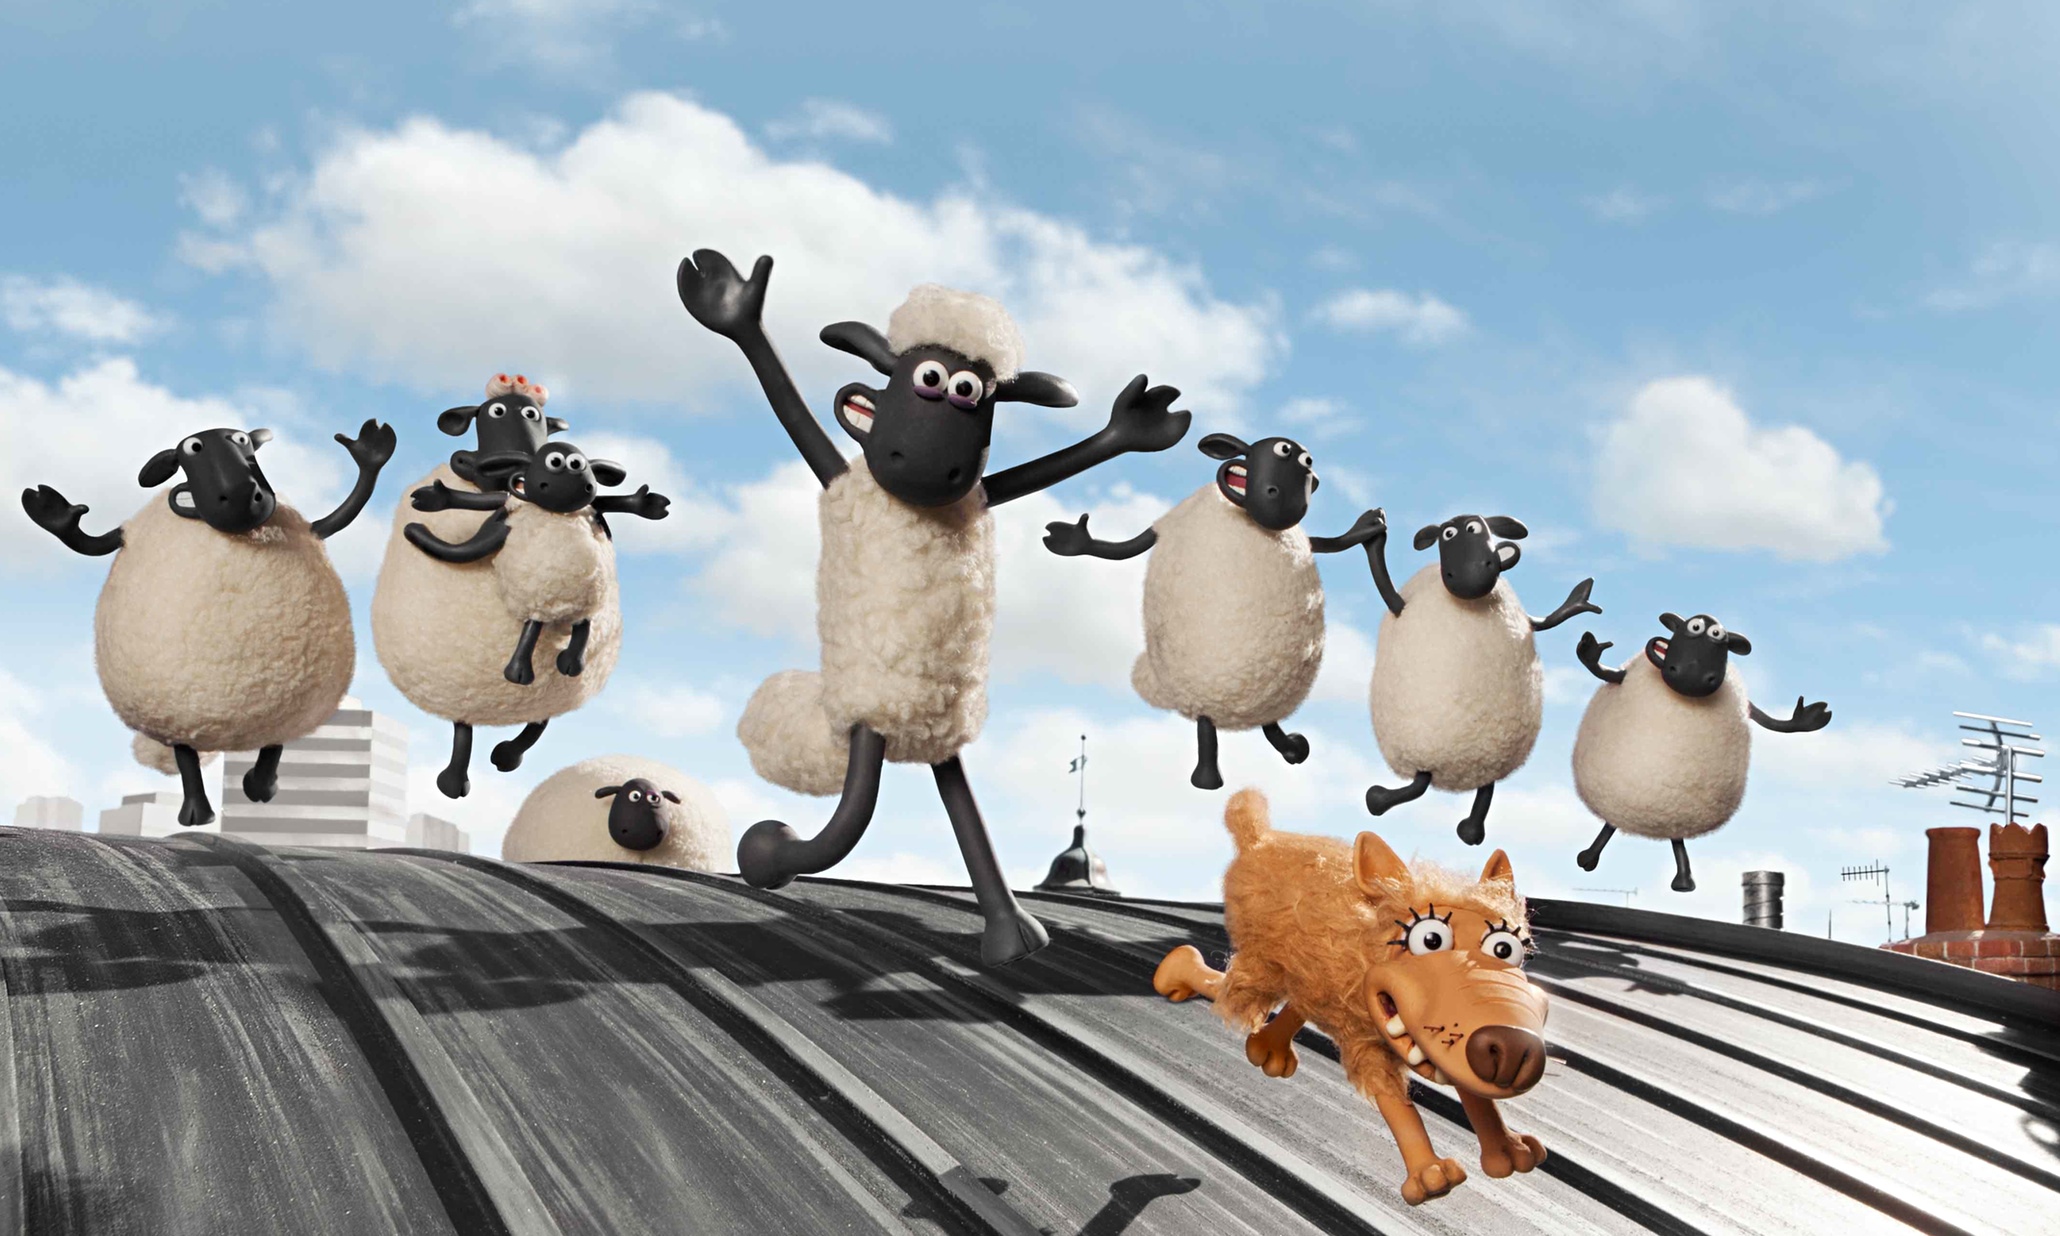 shaun-the-sheep-the-movie-009.jpg